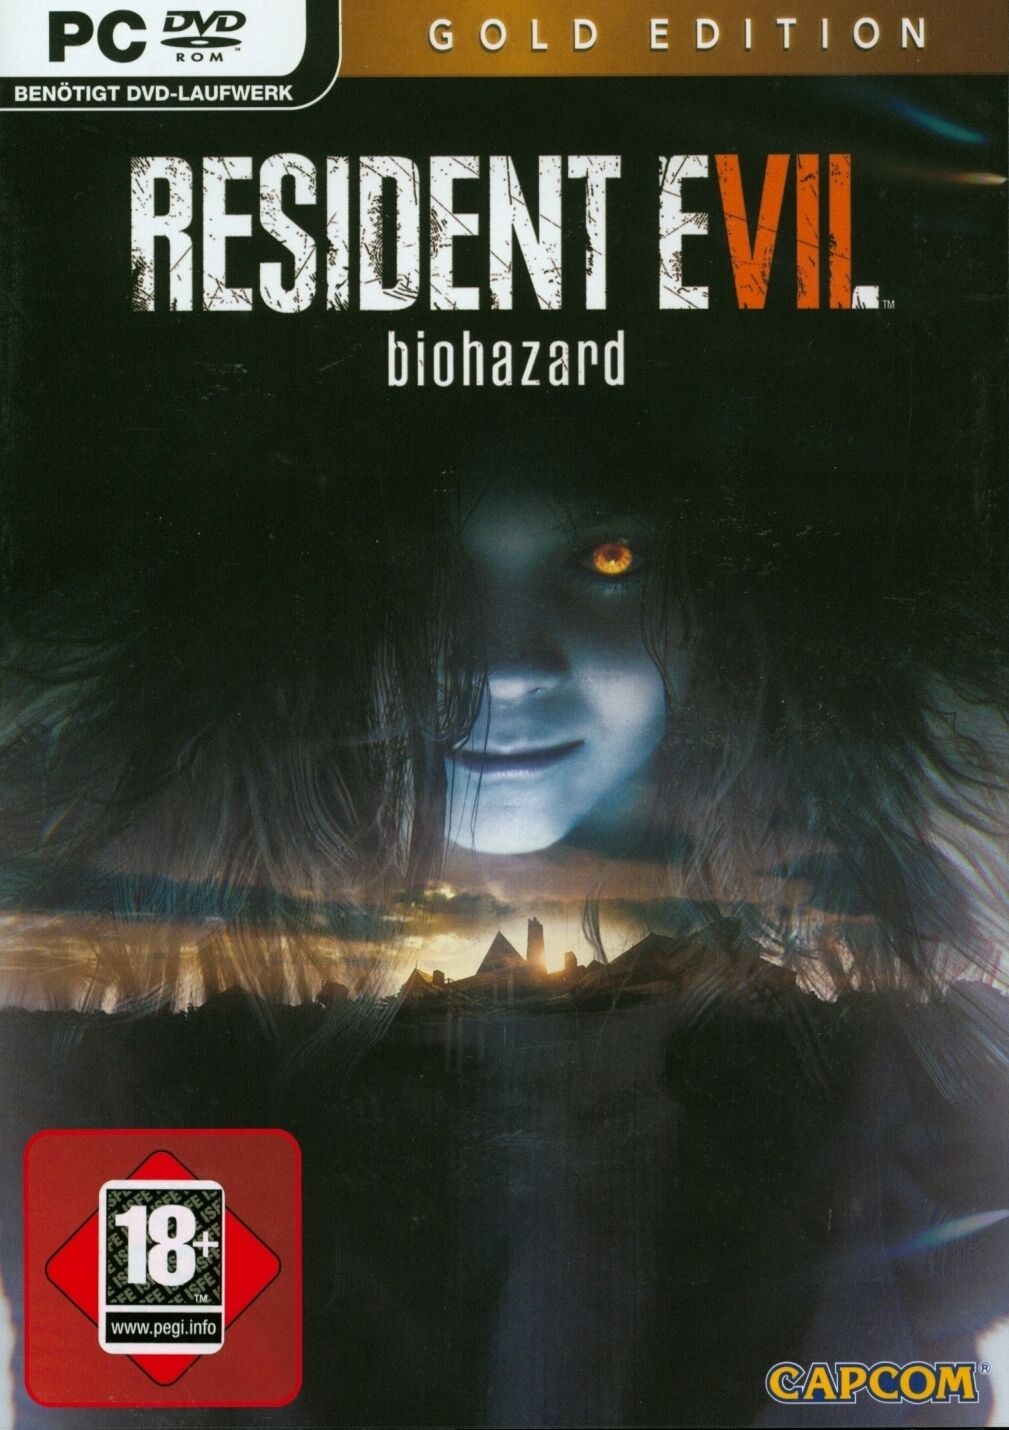 Capcom - Resident Evil 7 - Gold Edition [DVD] [PC] (D)